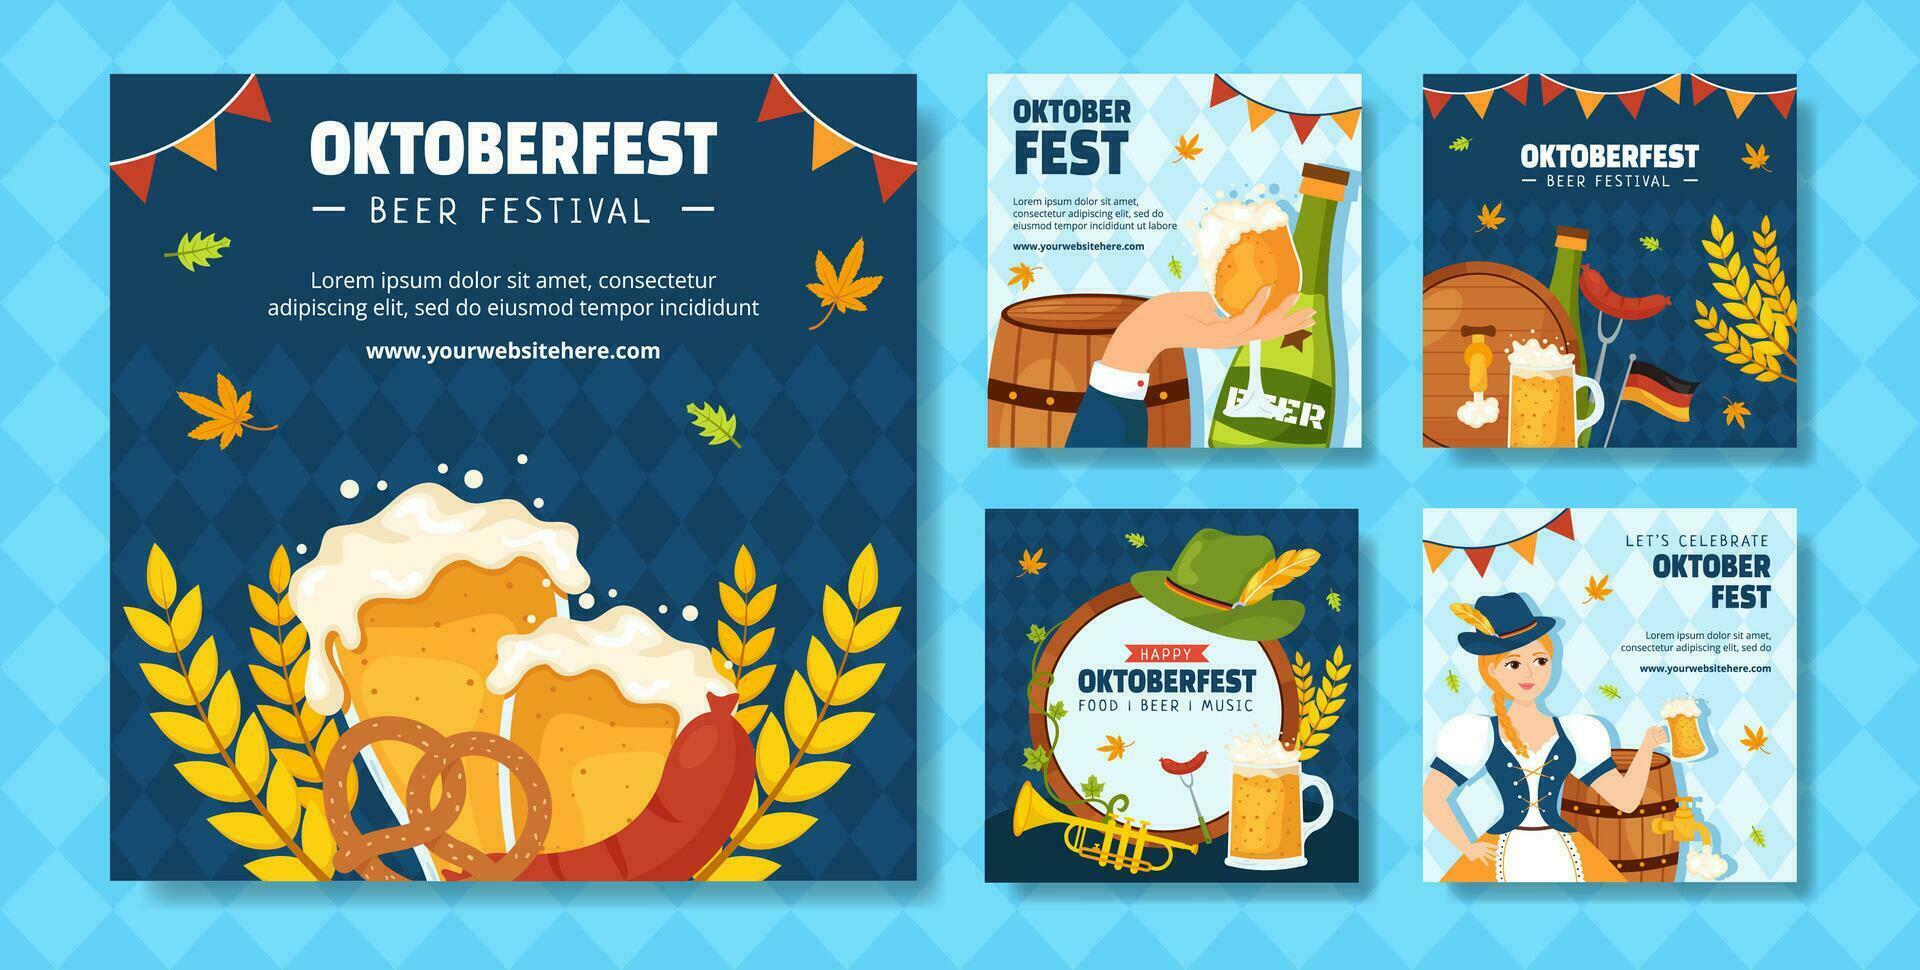 Oktoberfest cerveza festival social medios de comunicación enviar plano dibujos animados mano dibujado plantillas antecedentes ilustración vector